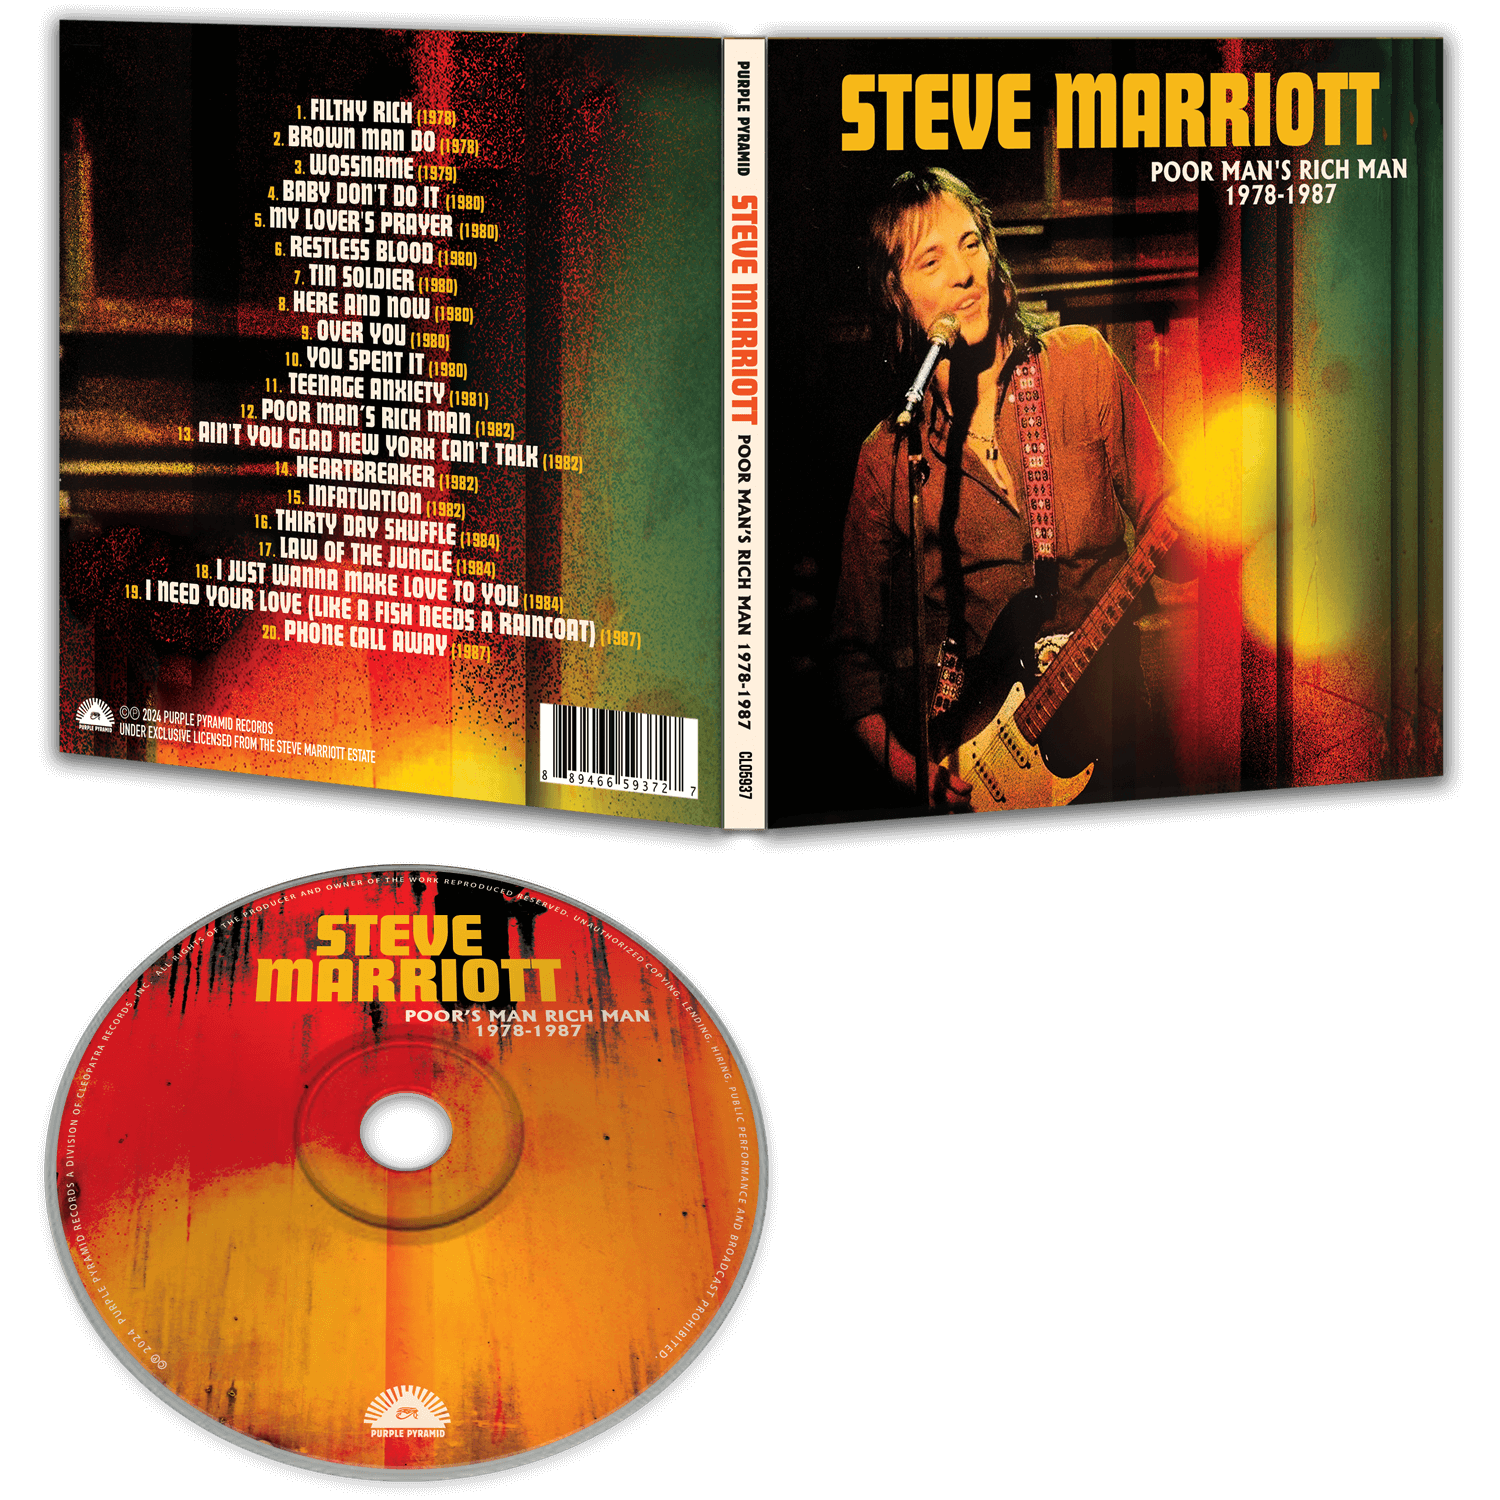 Steve Marriott - Poor Man's Rich Man 1978-1987 (CD Digipak)